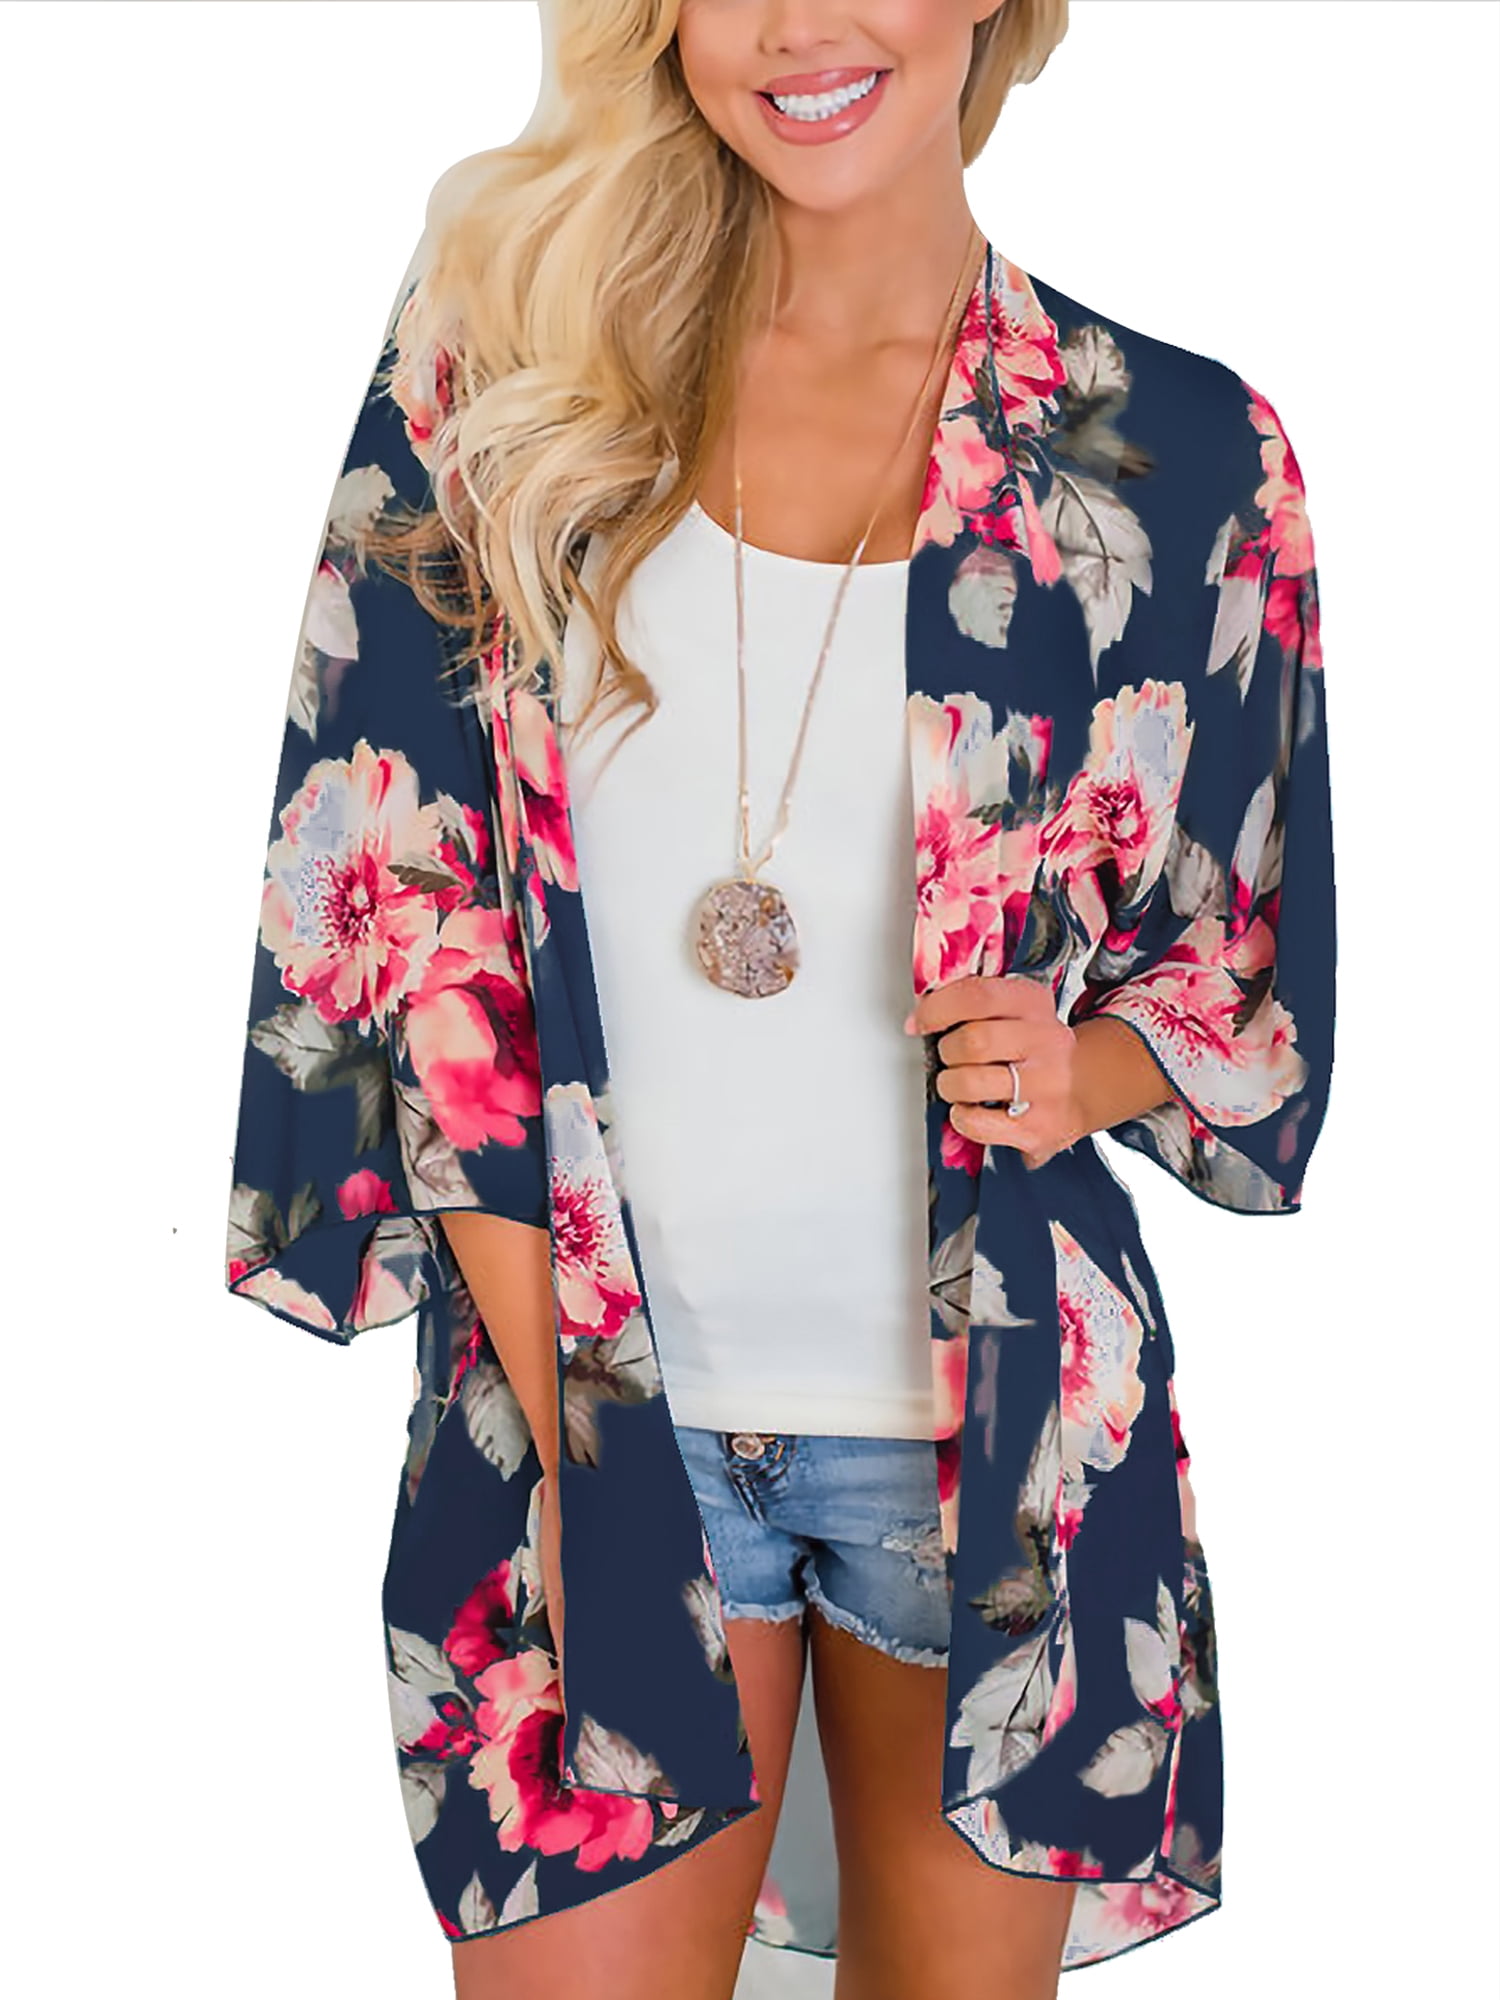 PRETTODAY Womens Floral Print Kimonos Loose Half Sleeve Shawl Chiffon Cardigan Blouses Casual Beach Cover Ups 